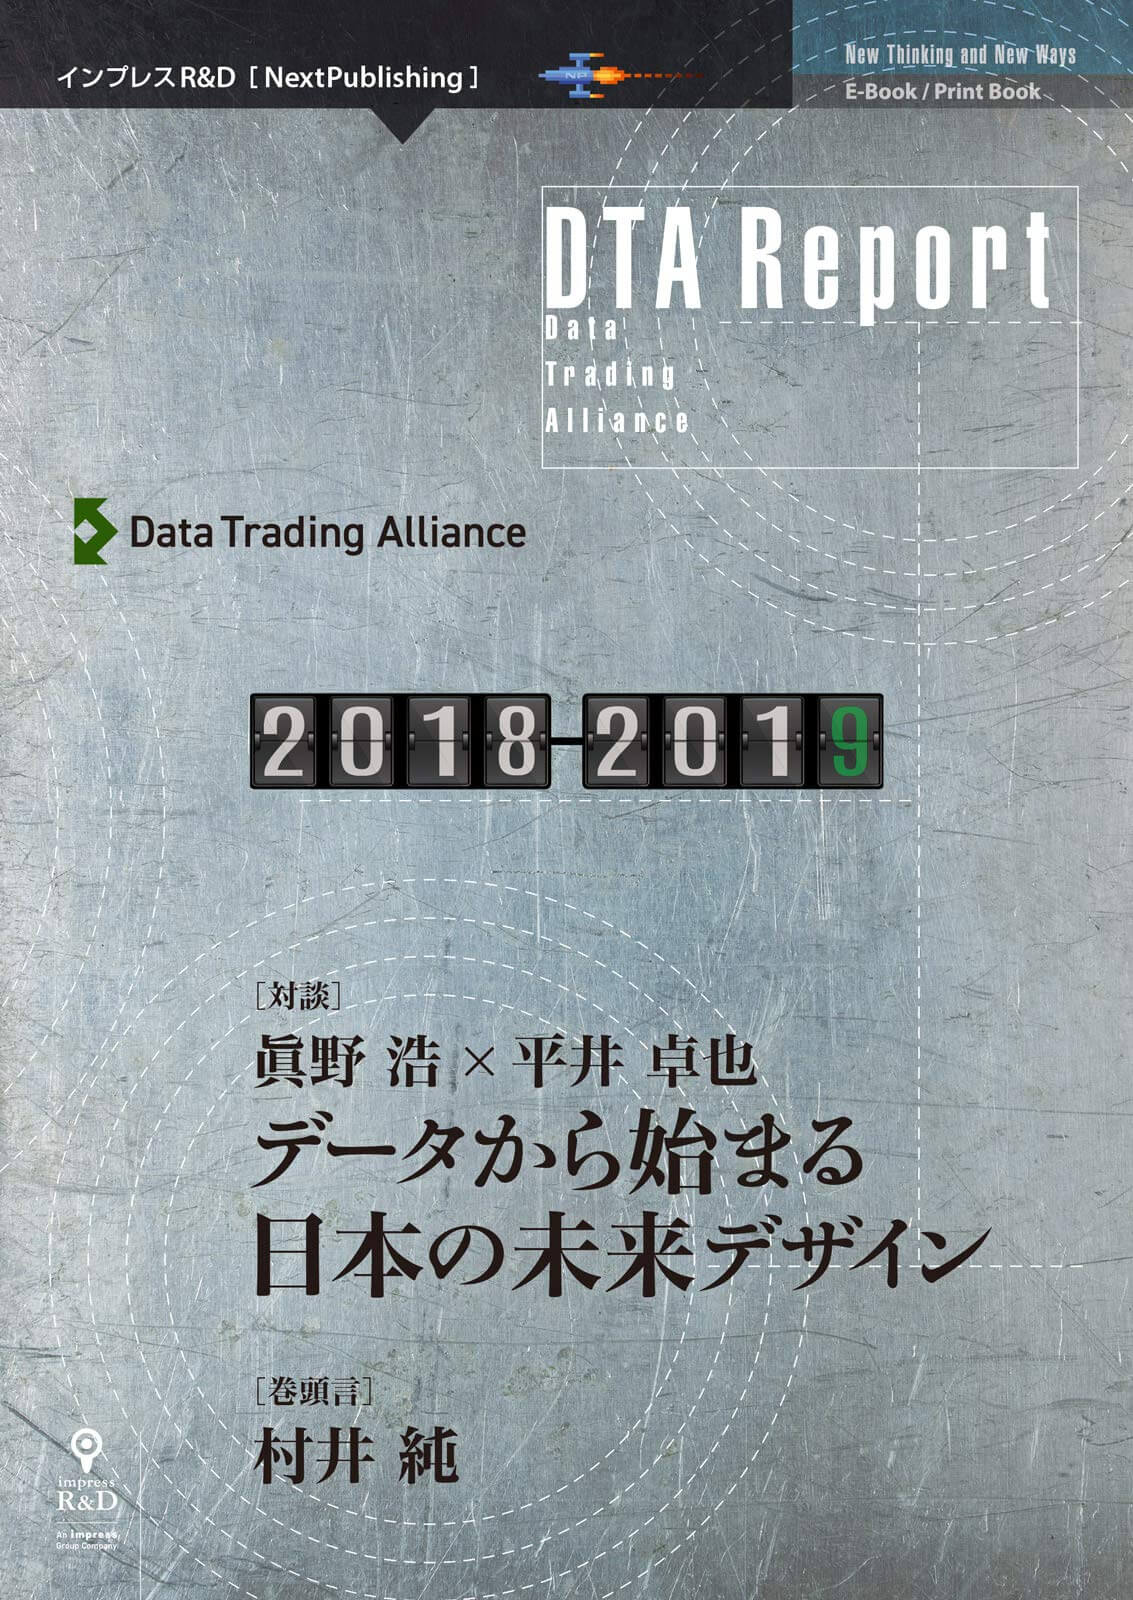 DSA Report 2018-2019 データから始まる日本の未来デザイン